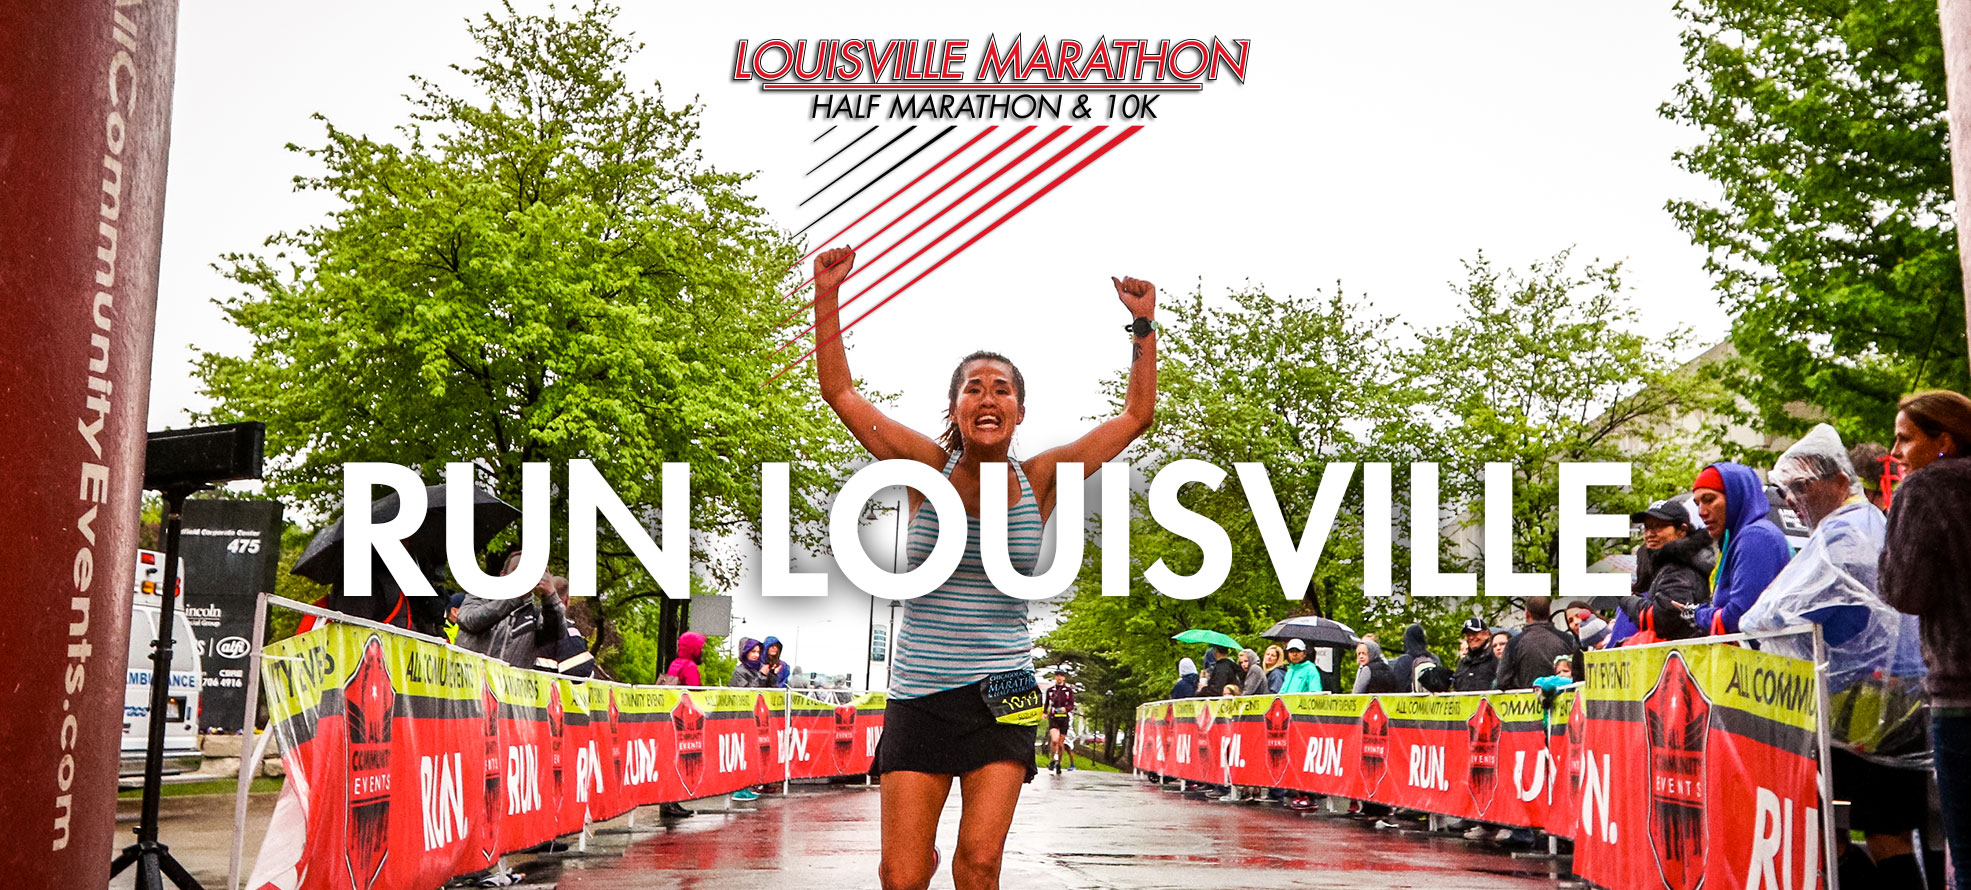 Louisville Marathon